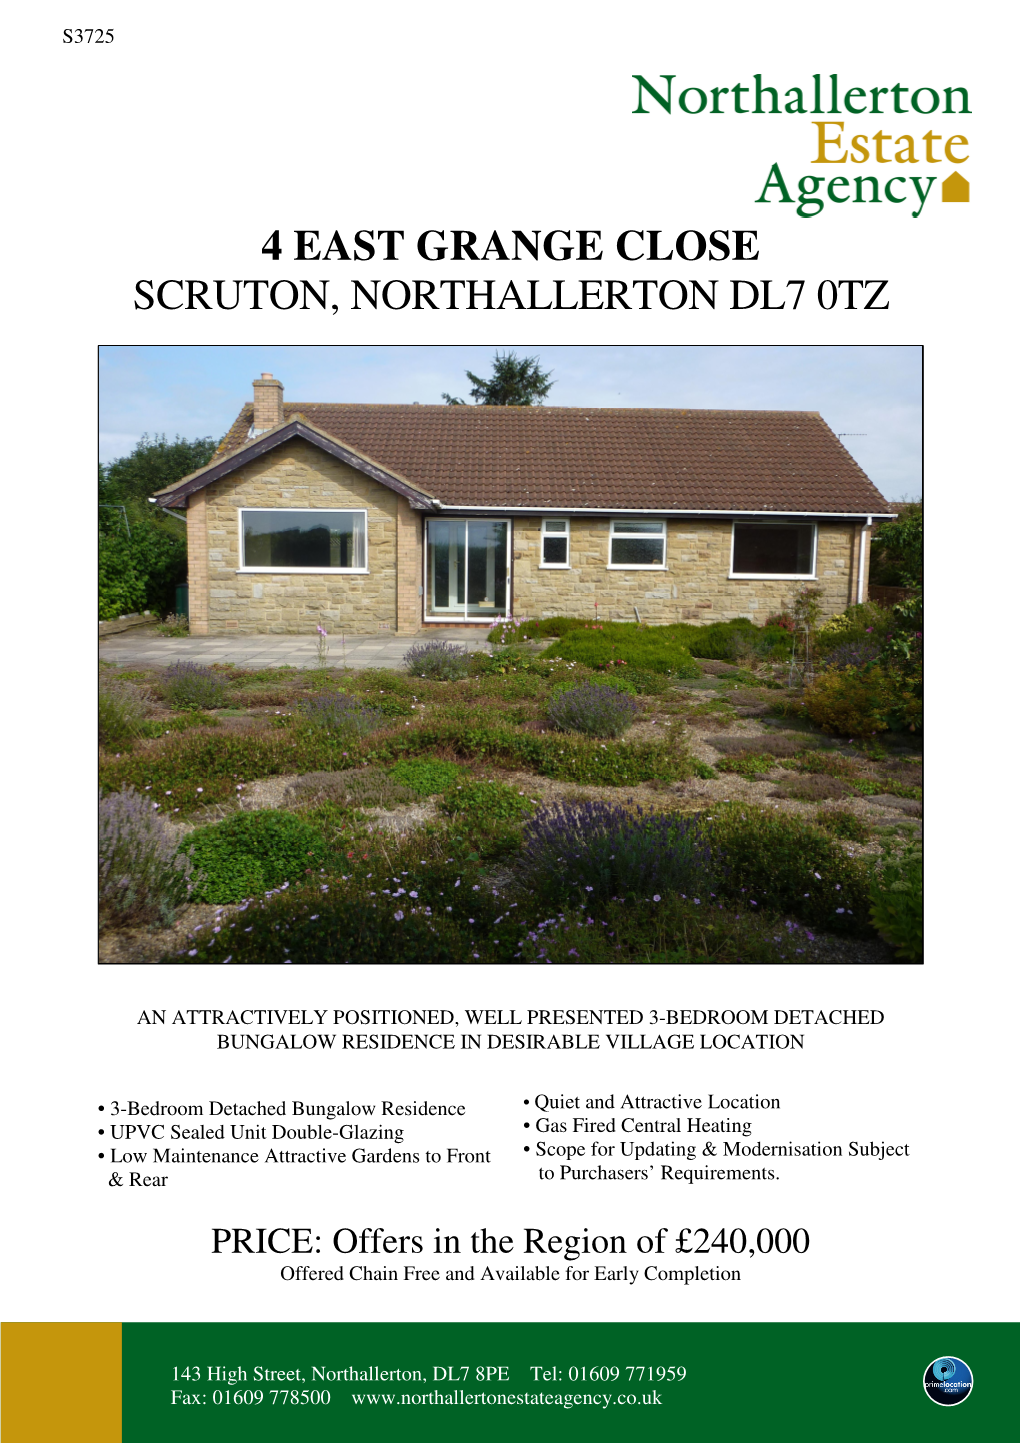 4 East Grange Close Scruton, Northallerton Dl7 0Tz